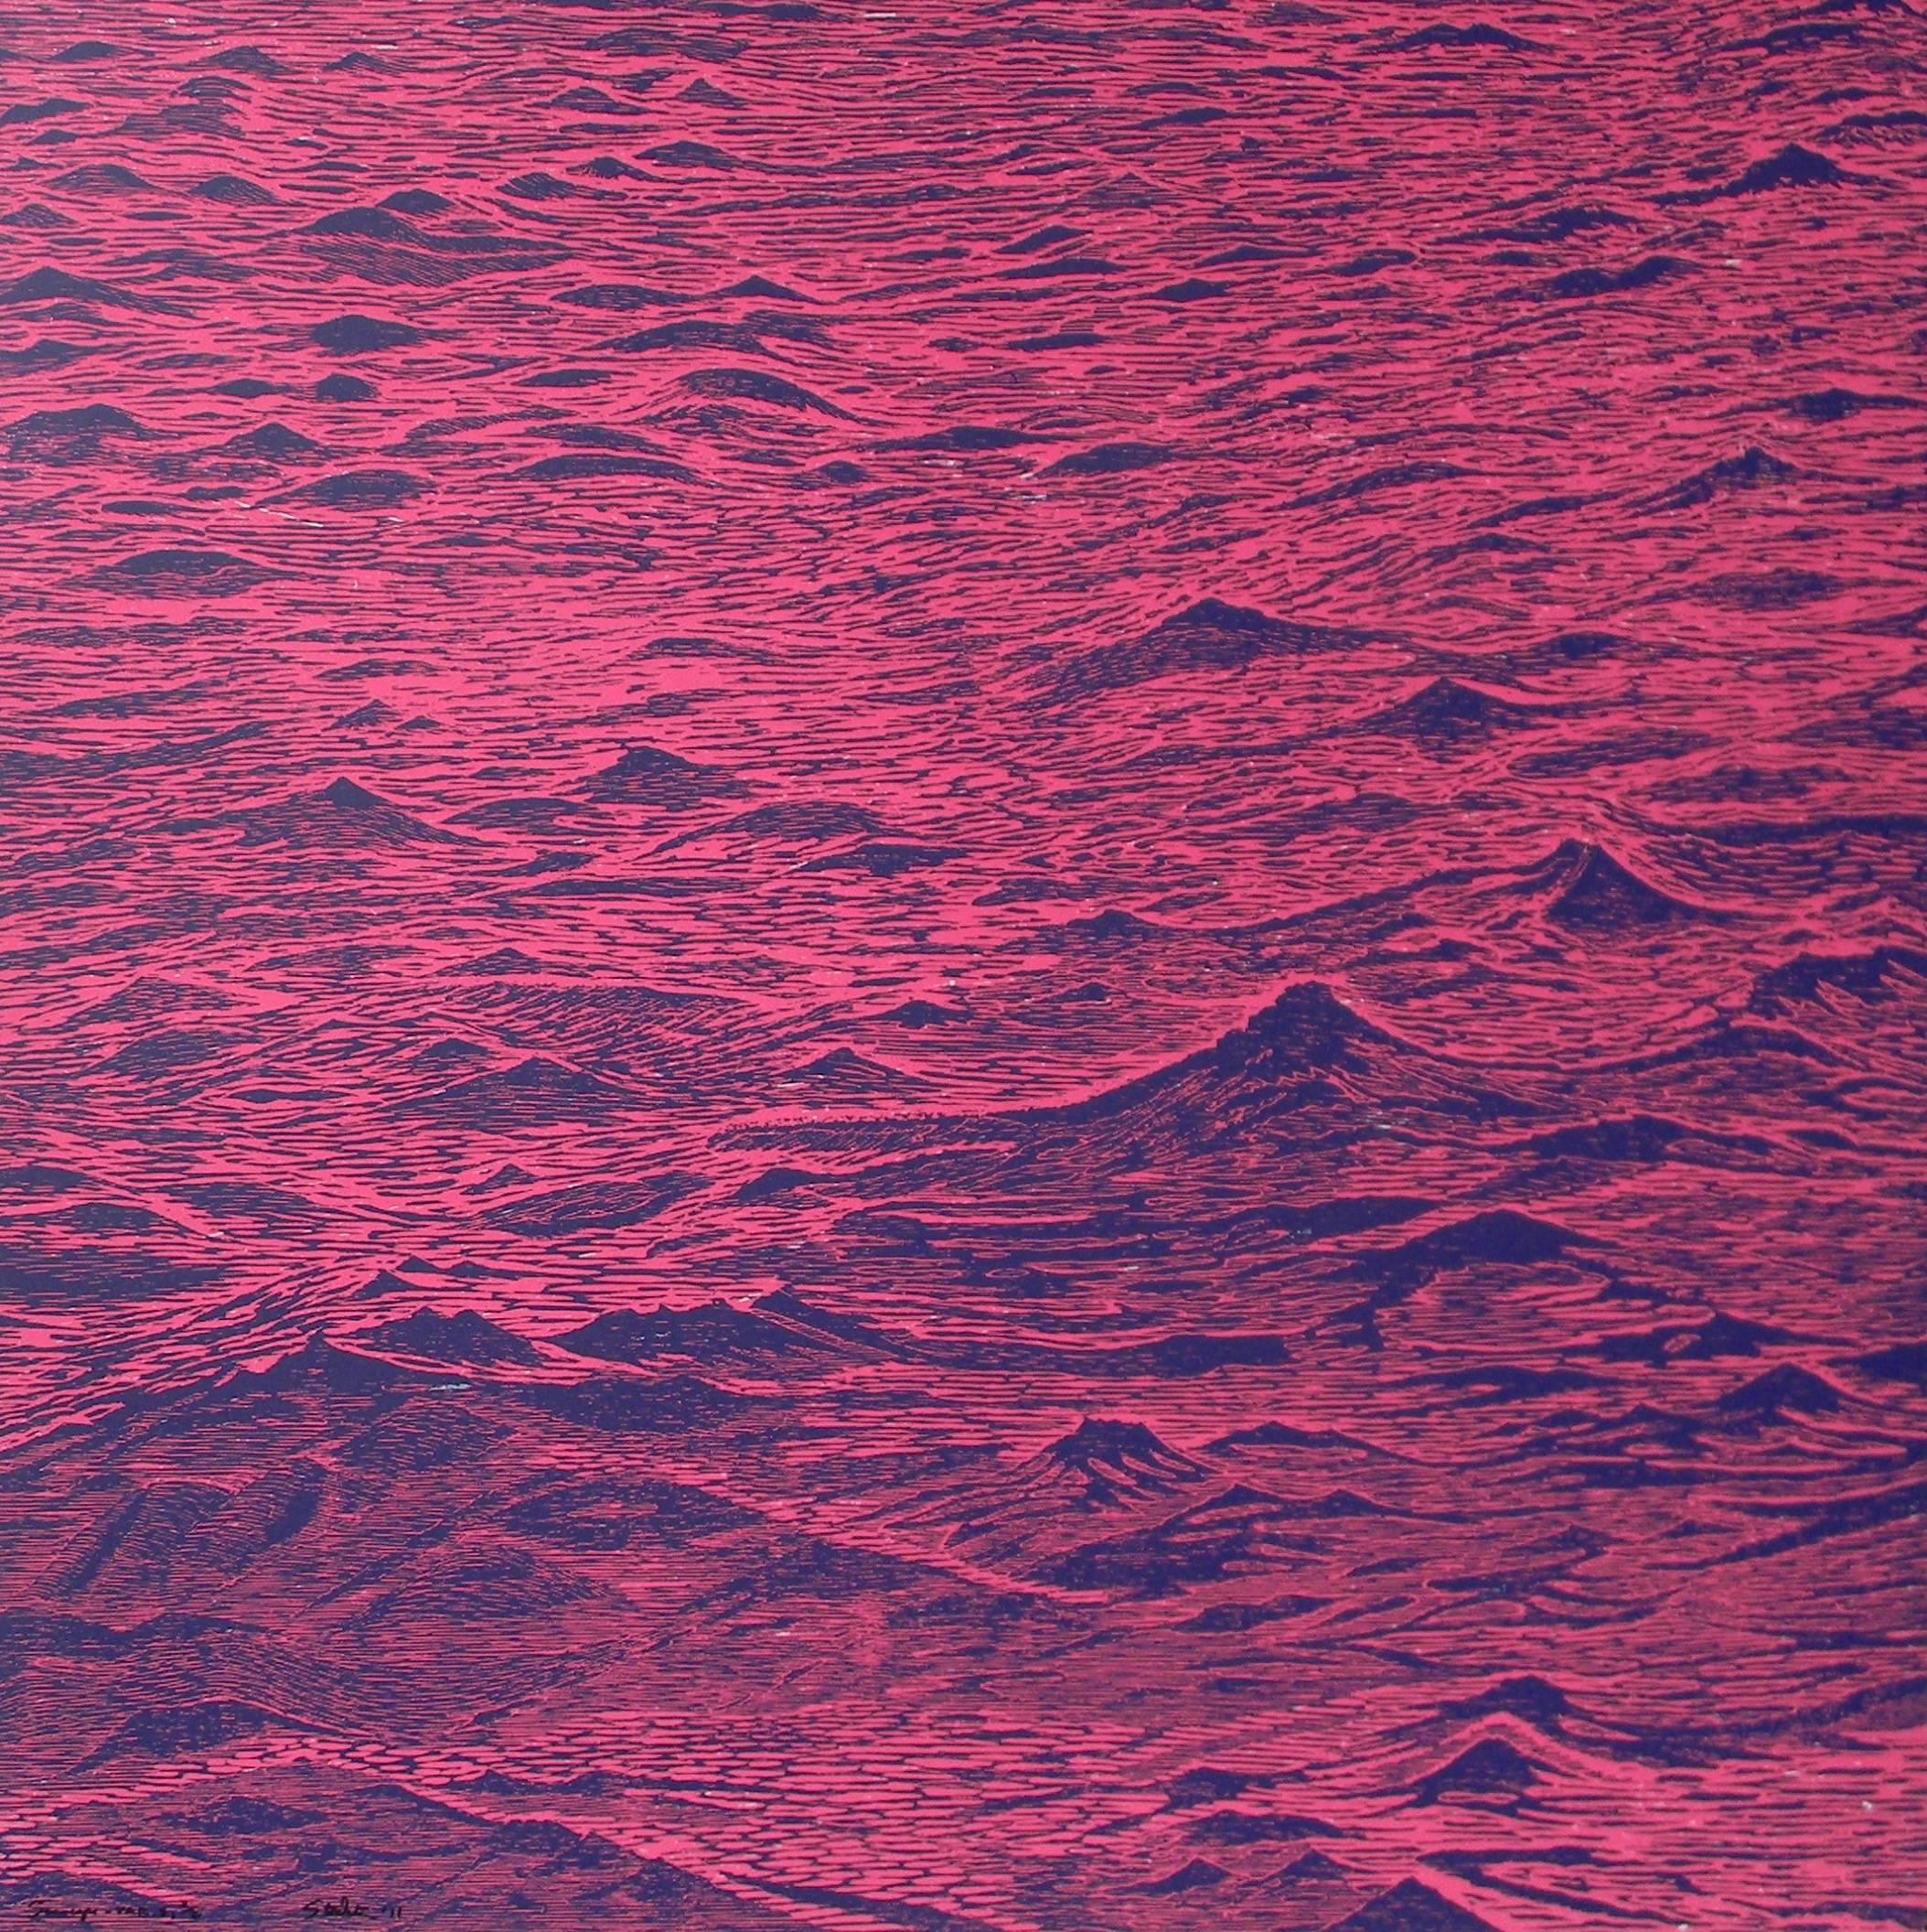 Seascape Five, Bright Pink, Dark Cobalt Blue Ocean Waves Woodcut Print